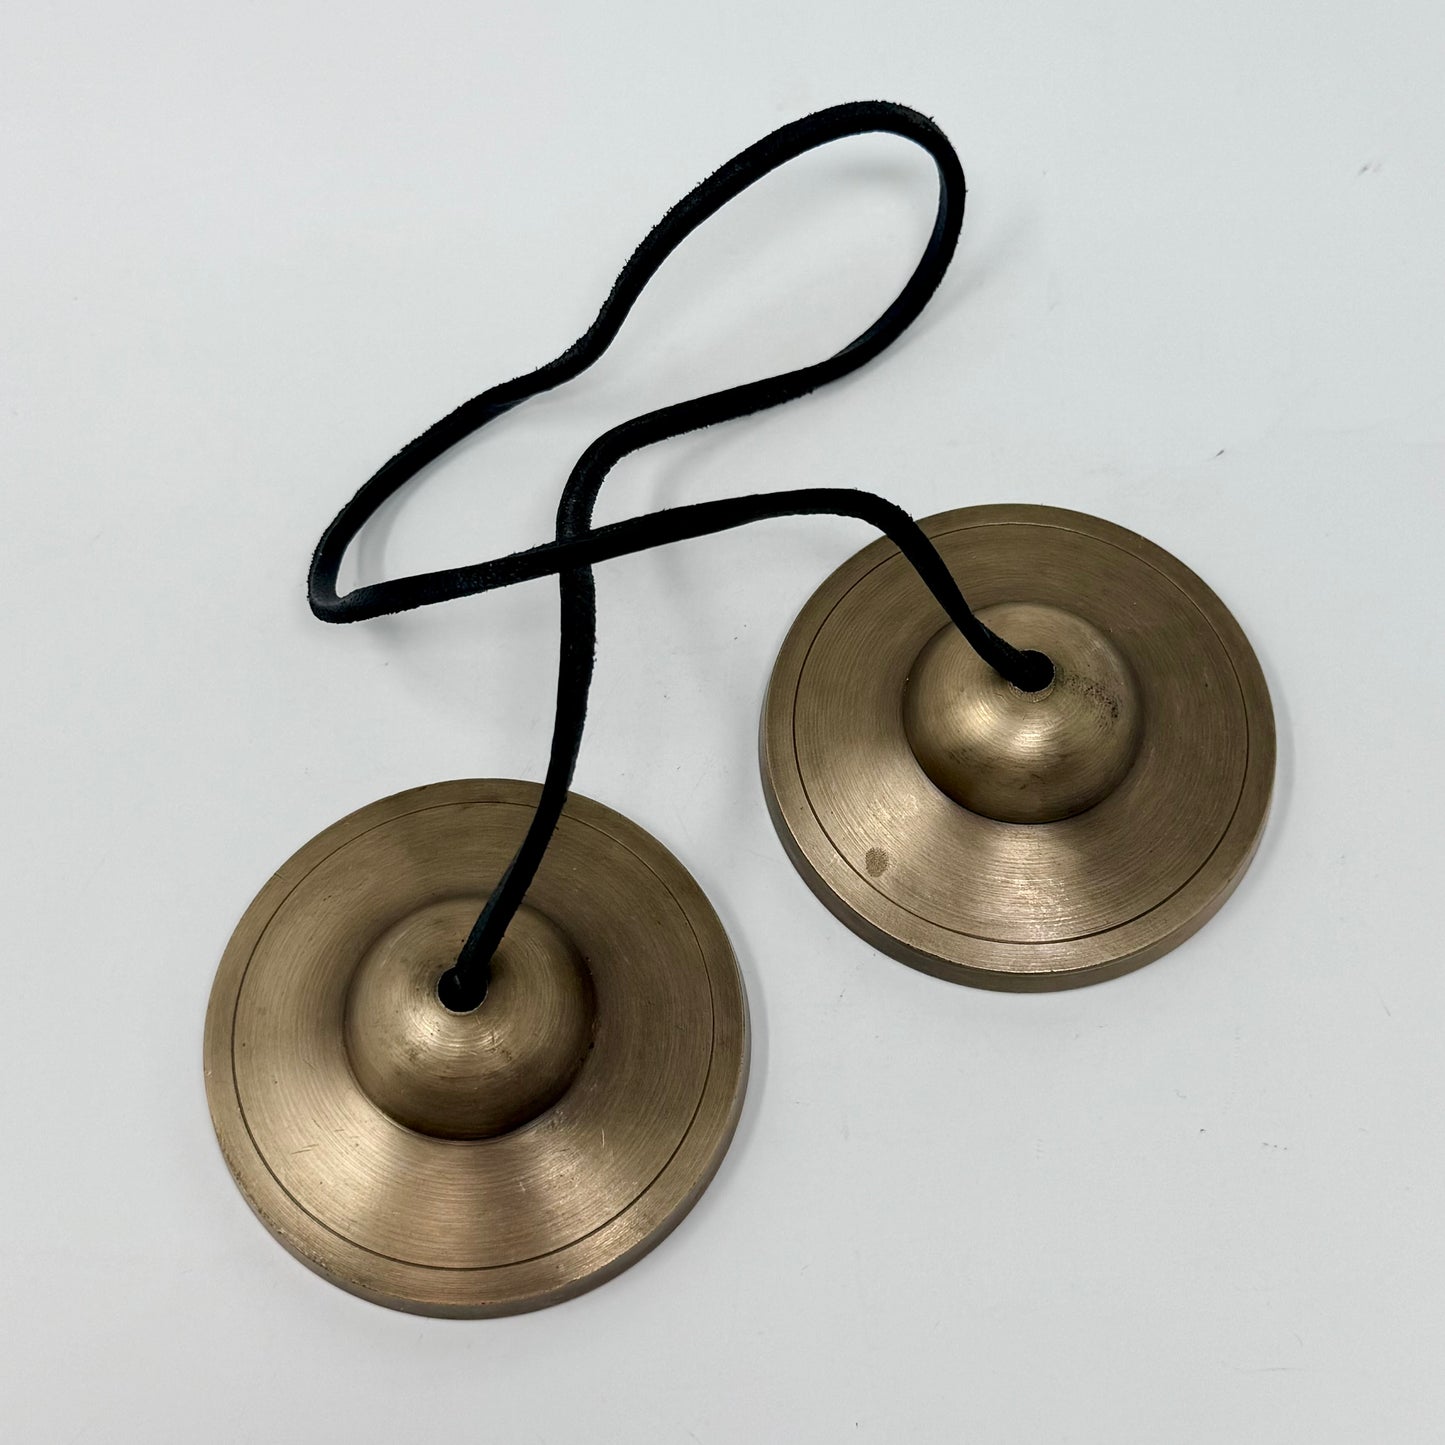 2.5” Diameter Brass Cymbals